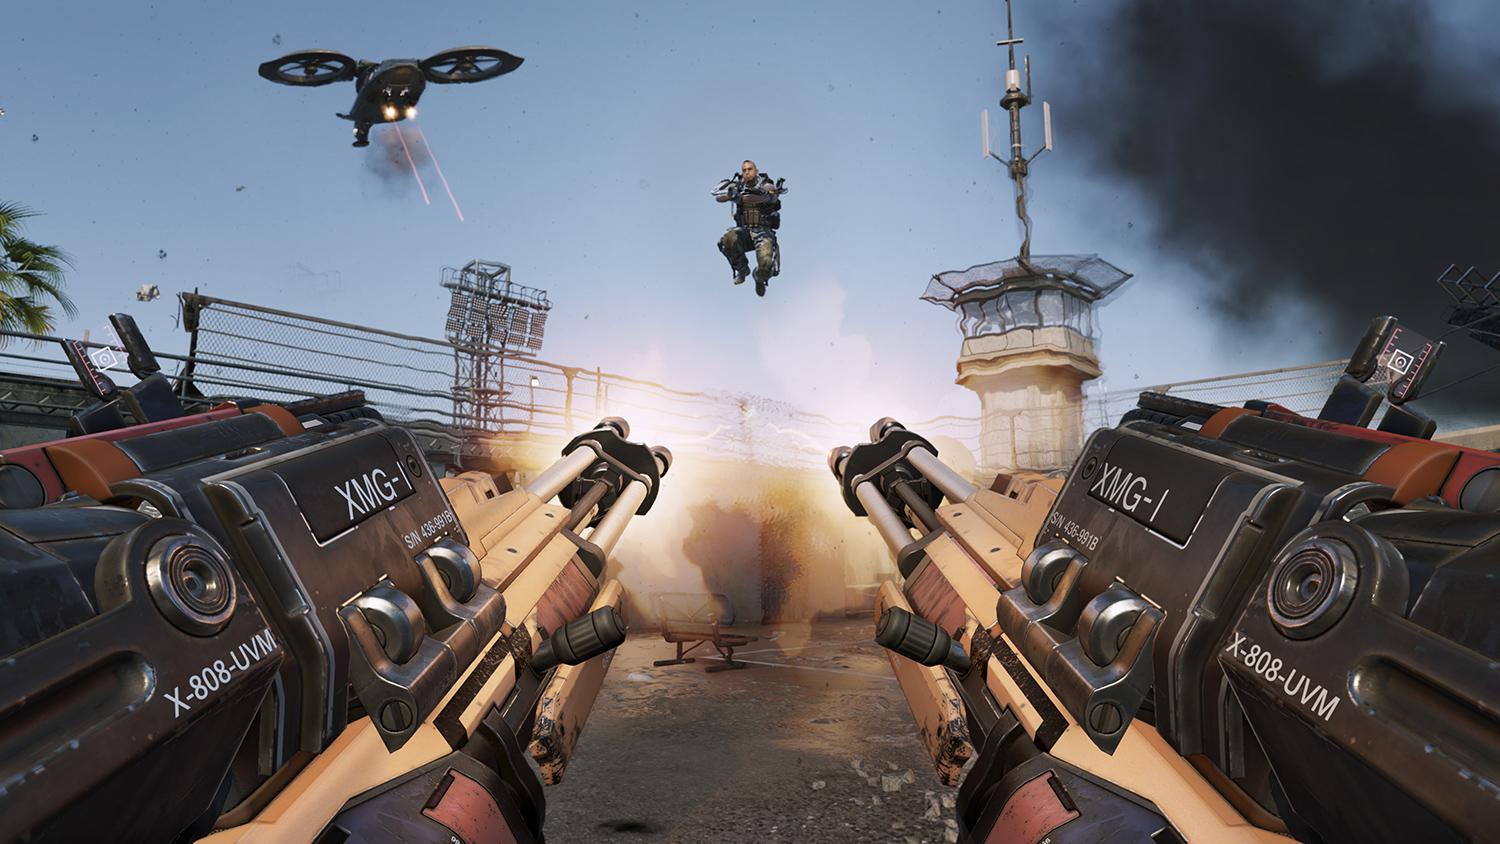 Call of Duty: Infinite Warfare Multiplayer FAQ